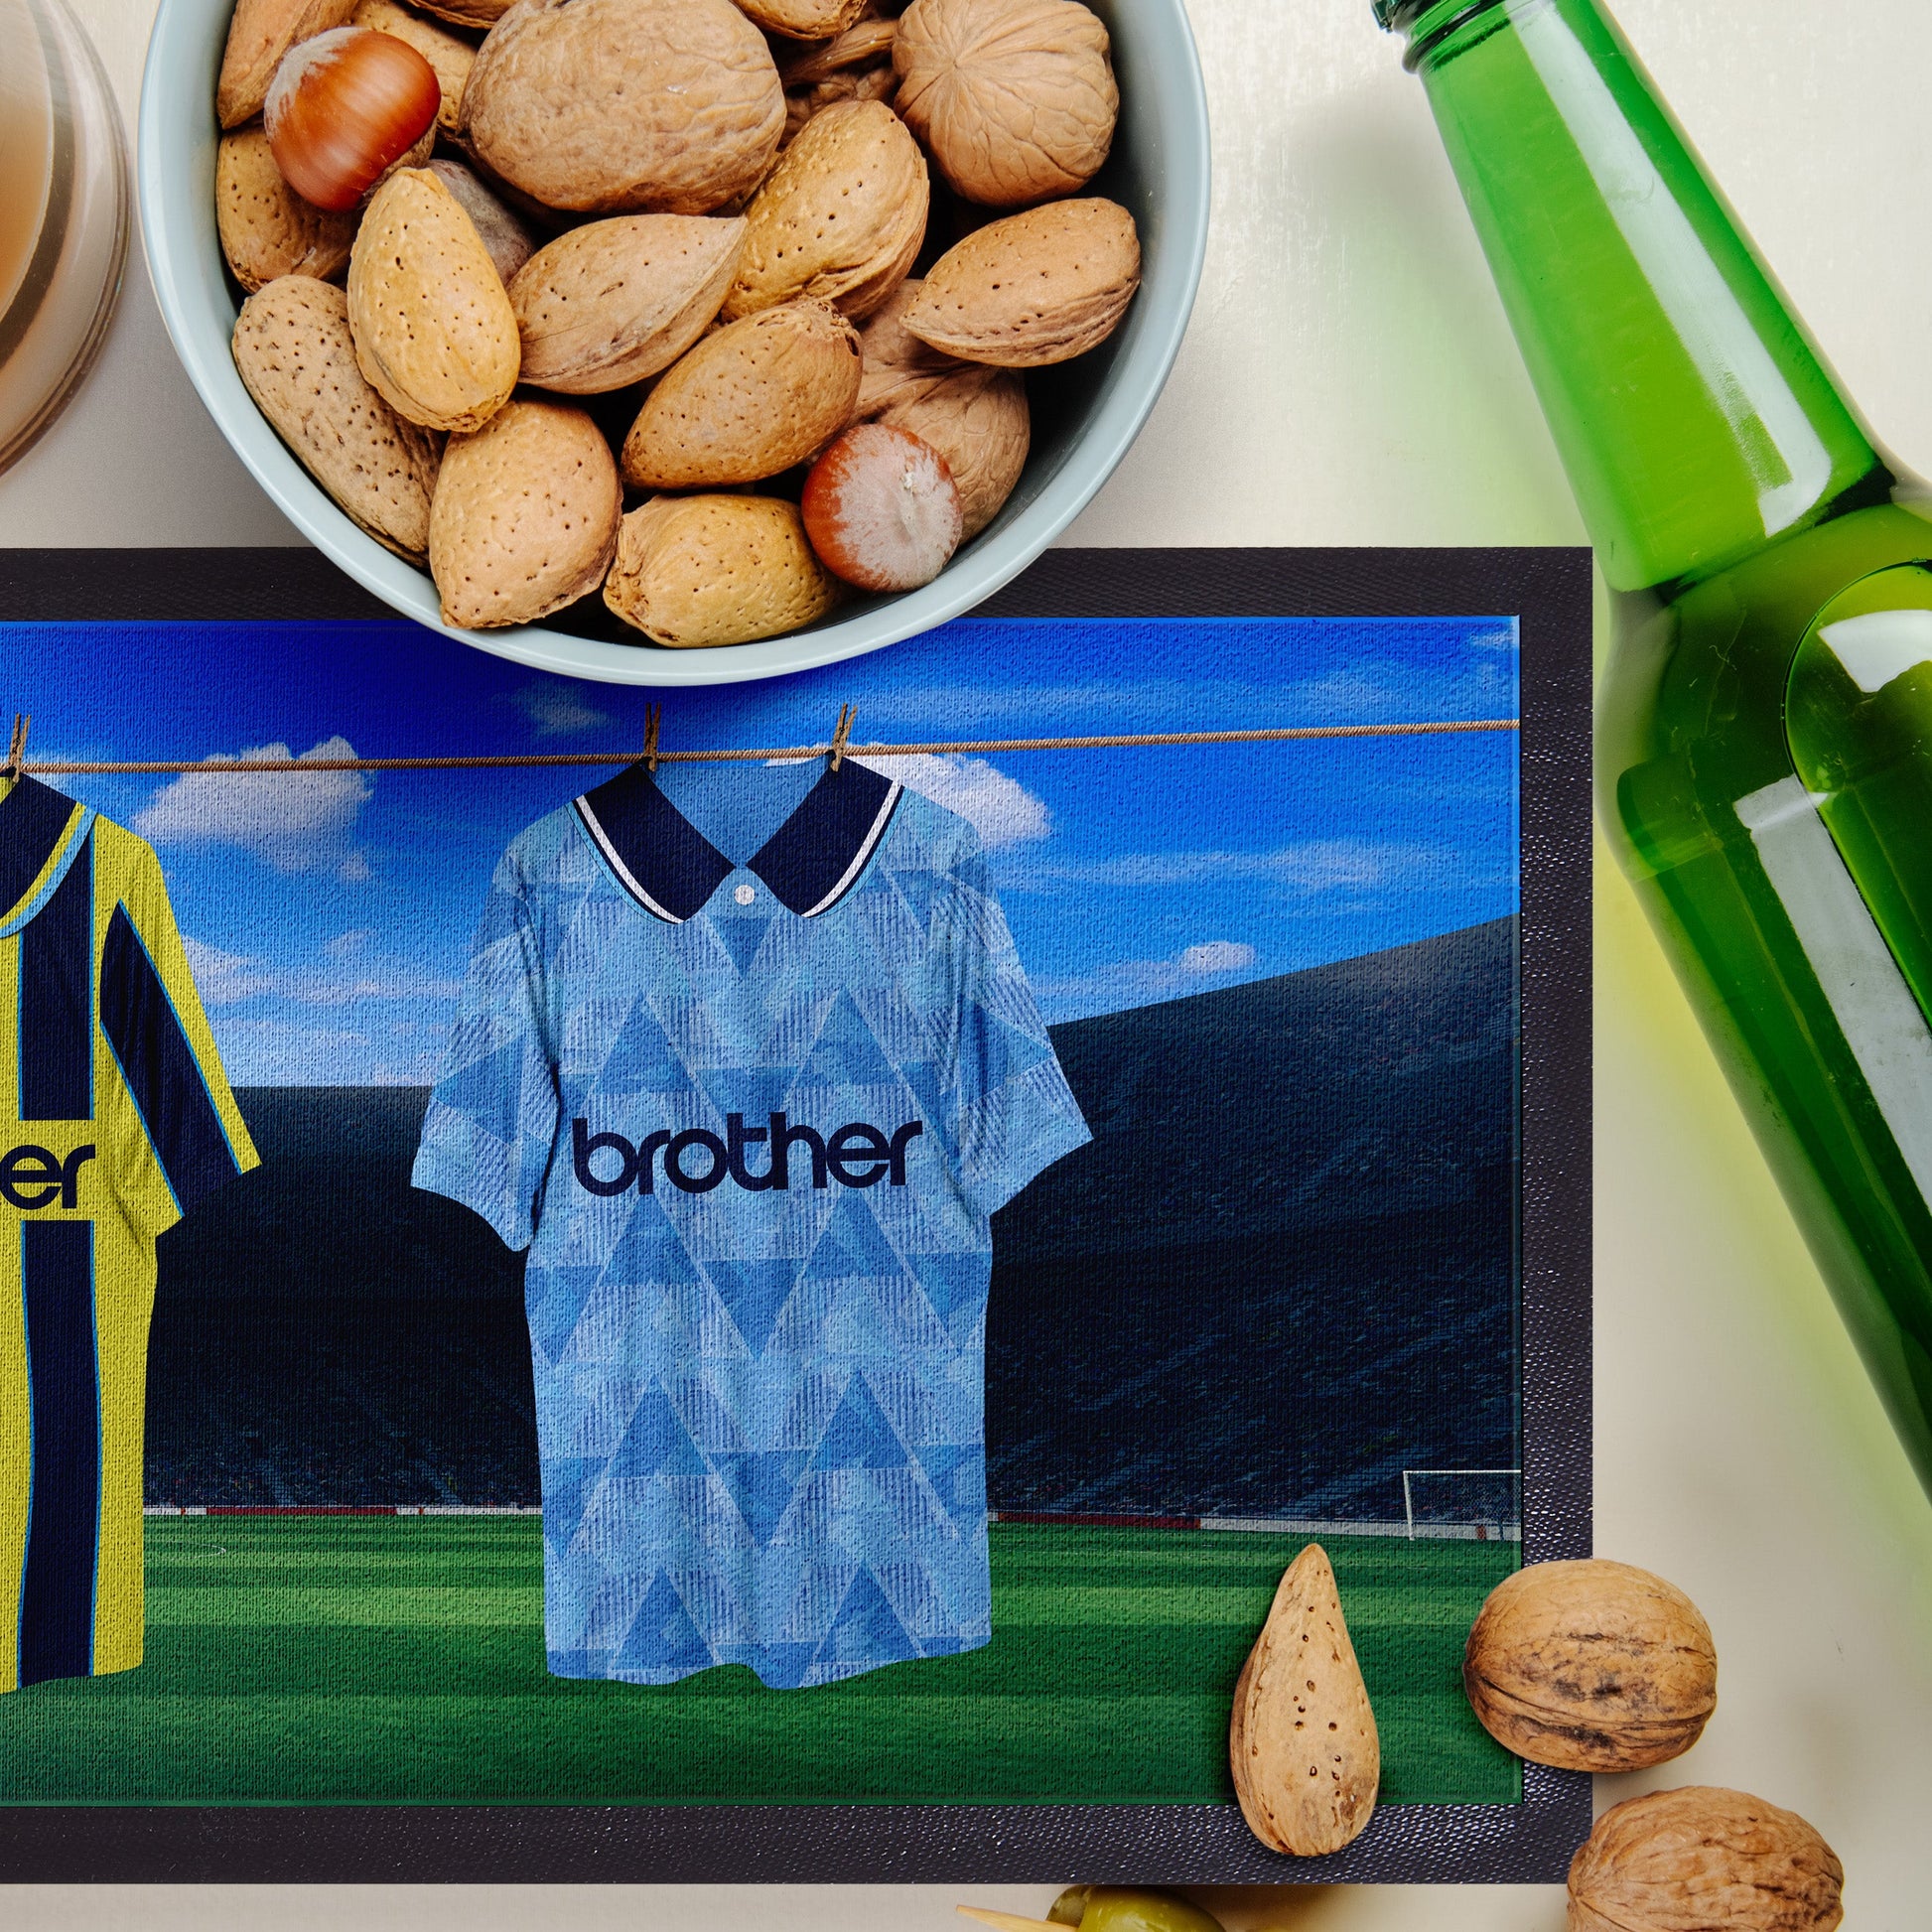 Manchester City Retro Hanging Football Shirts - Personalised Bar Runner